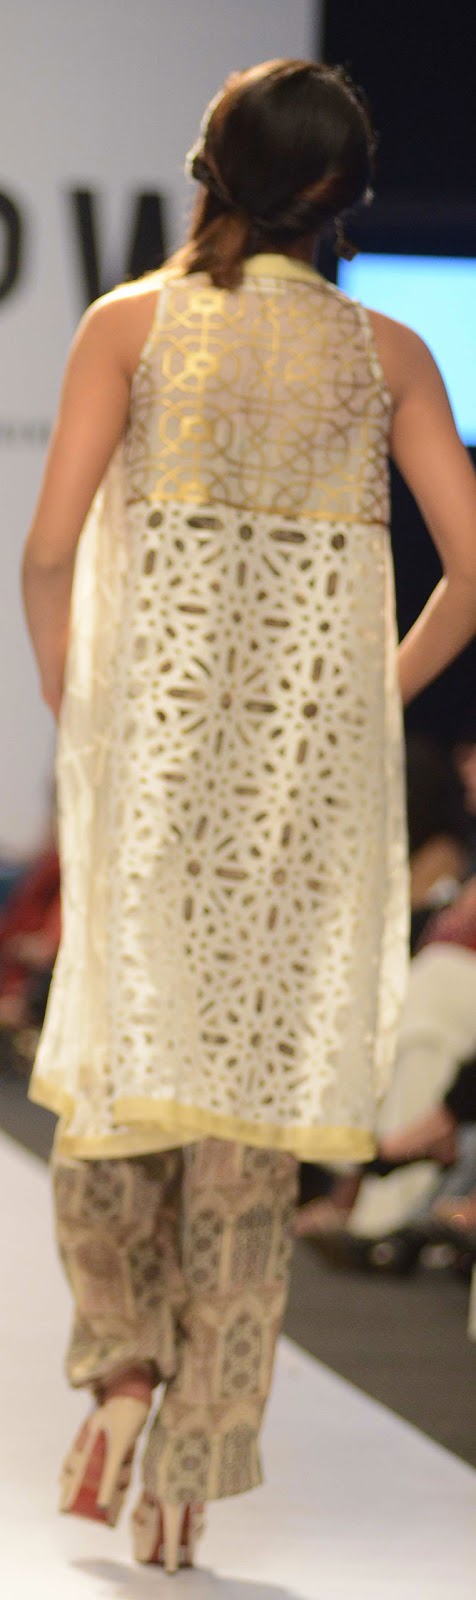 Nida Azwer - Fashion Pakistan Week 6 - Spring 2014 - Arabesque collection 